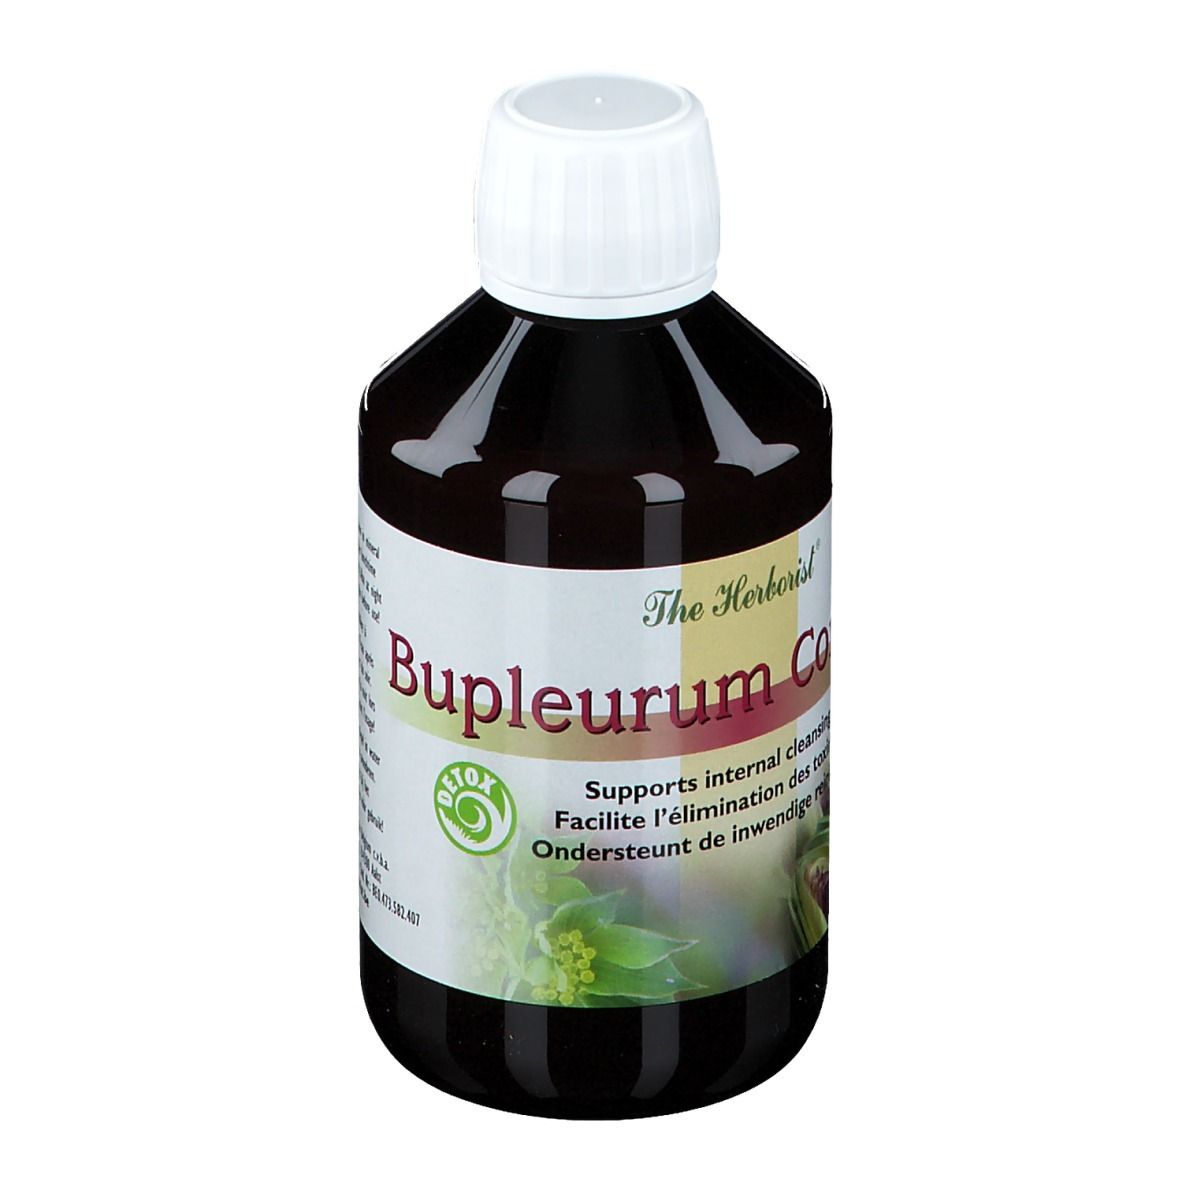 The Herborist Bupleurum Complex ®